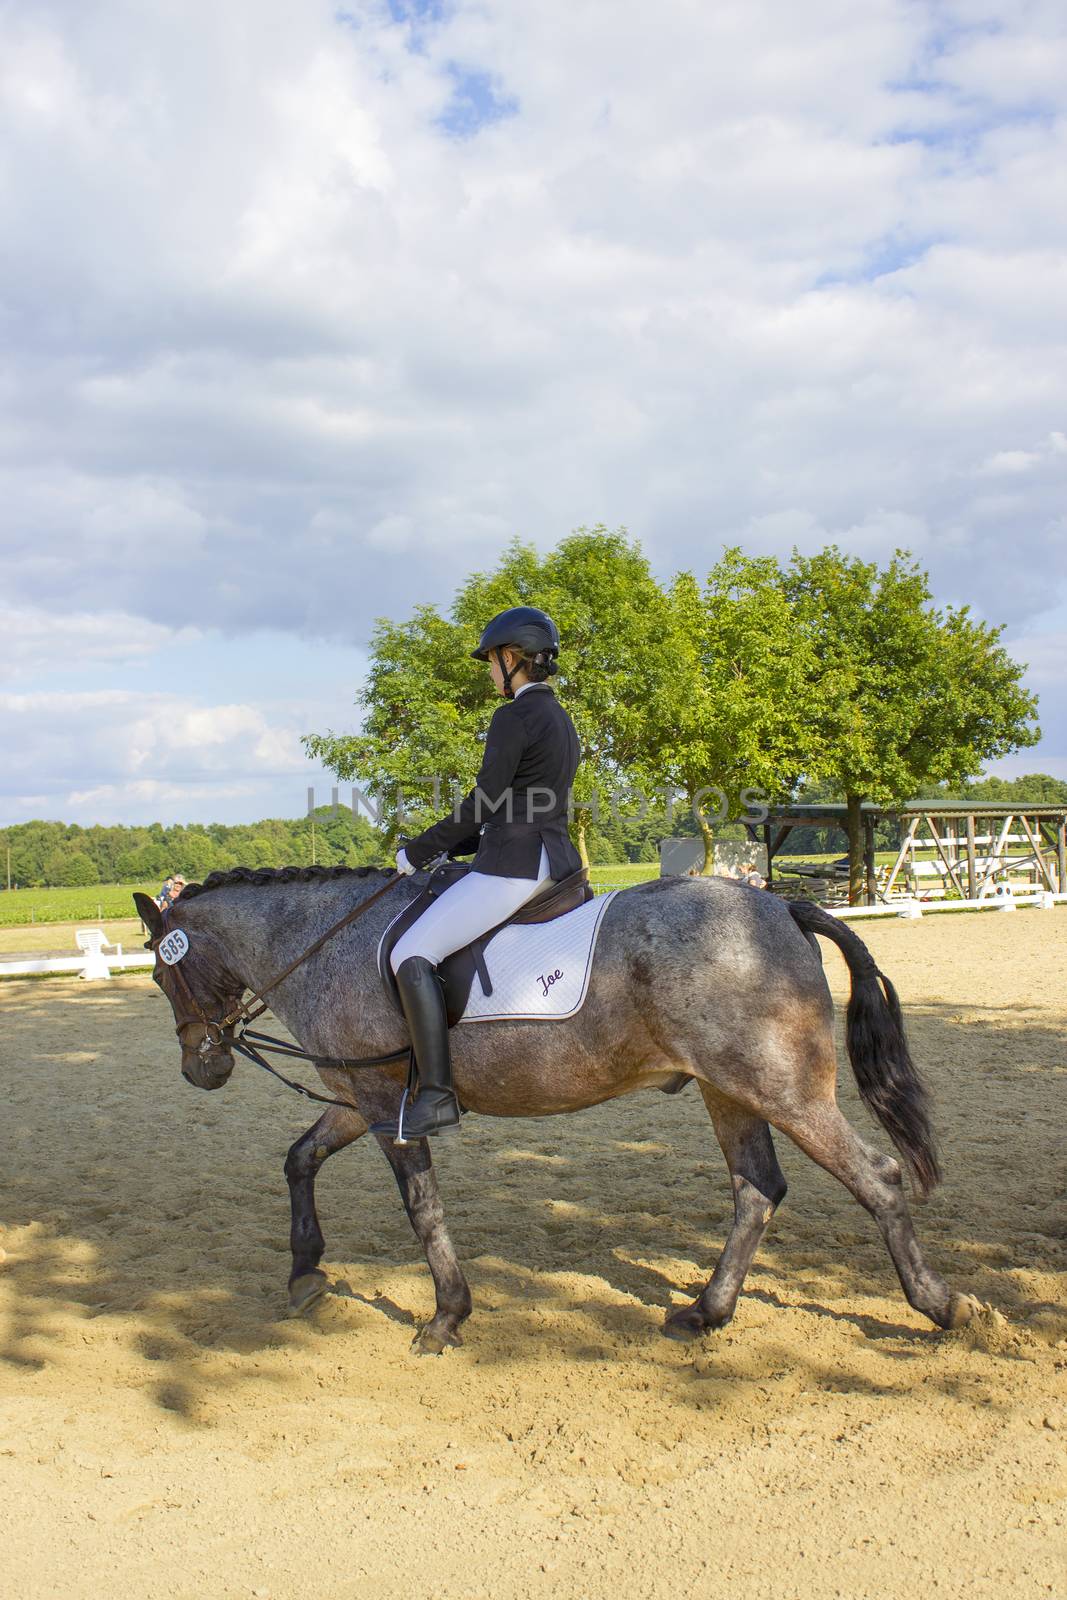 young girl riding a horse outdoors by miradrozdowski